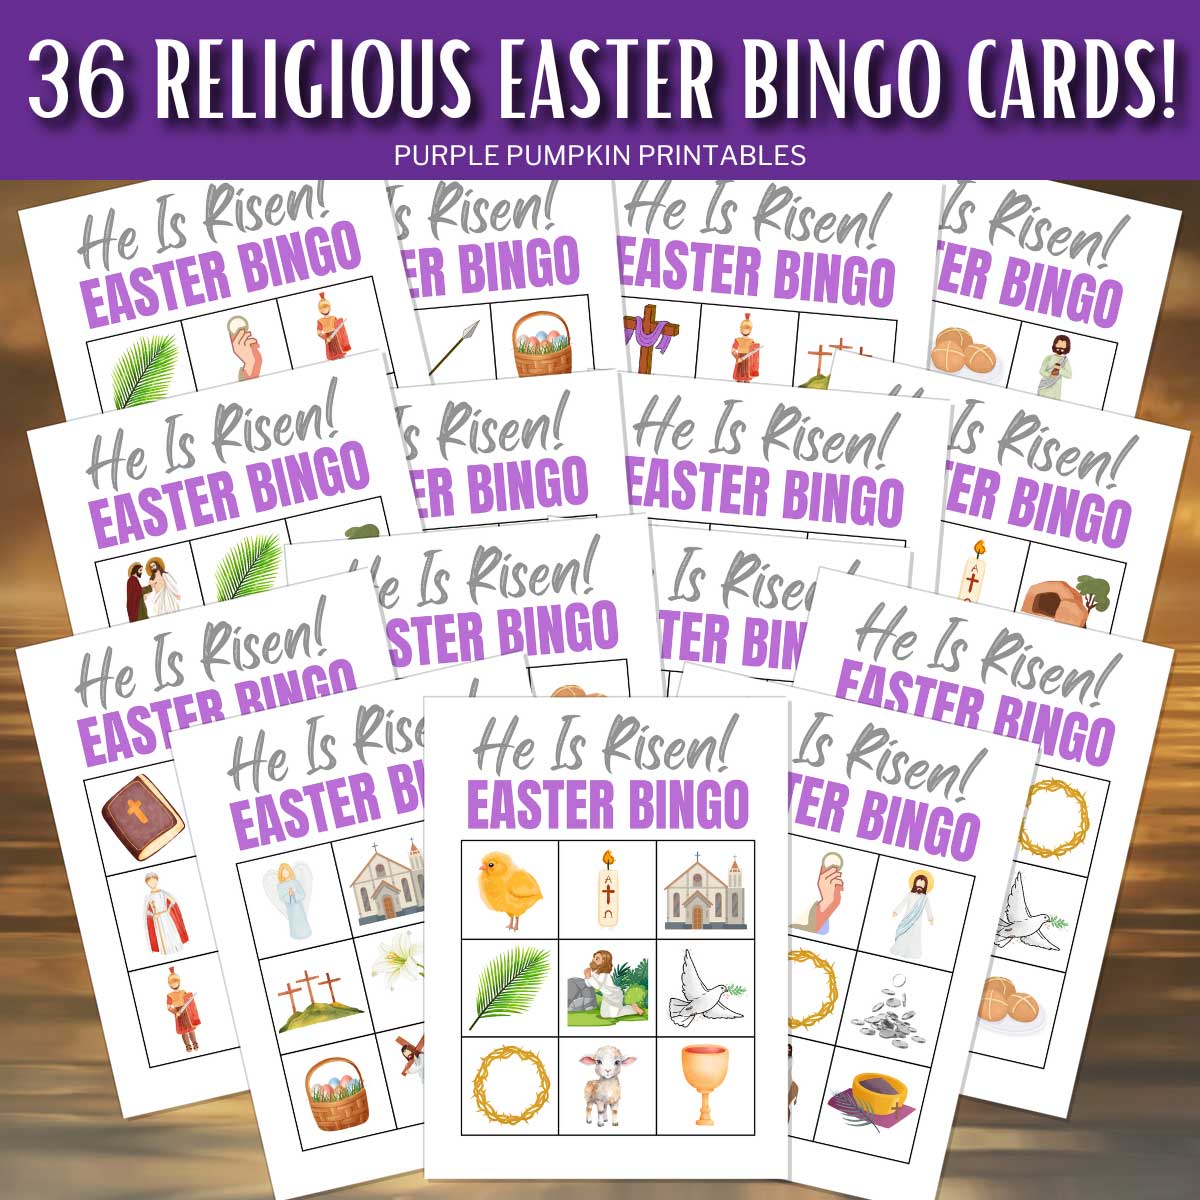 36 Printable Religious Easter Bingo Game Cards